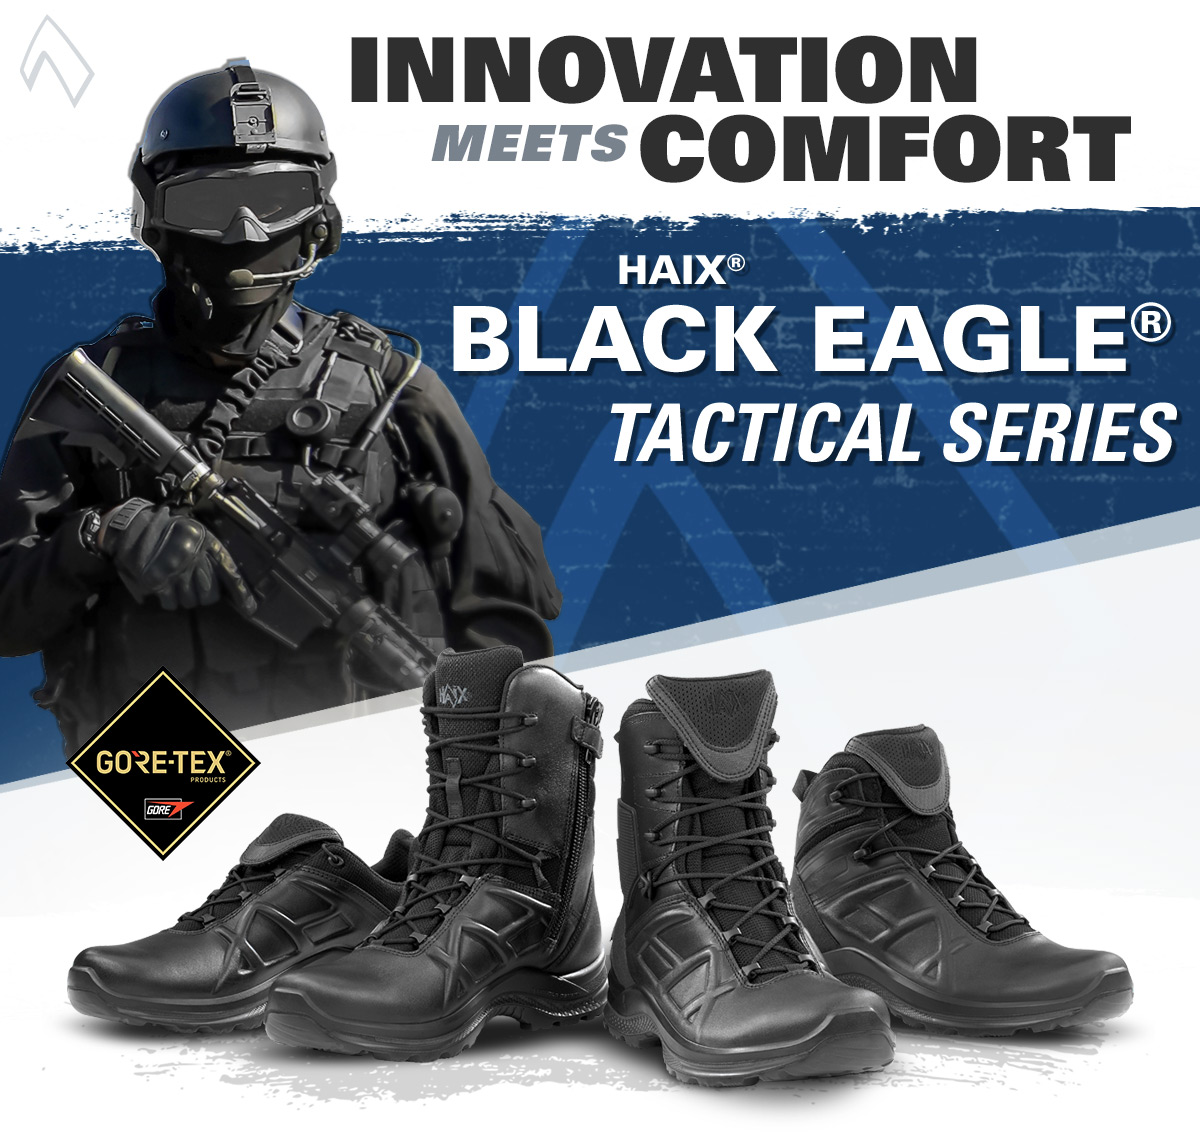 https://www.haixca.com/media/image/13/c7/94/tactical-boots.jpg